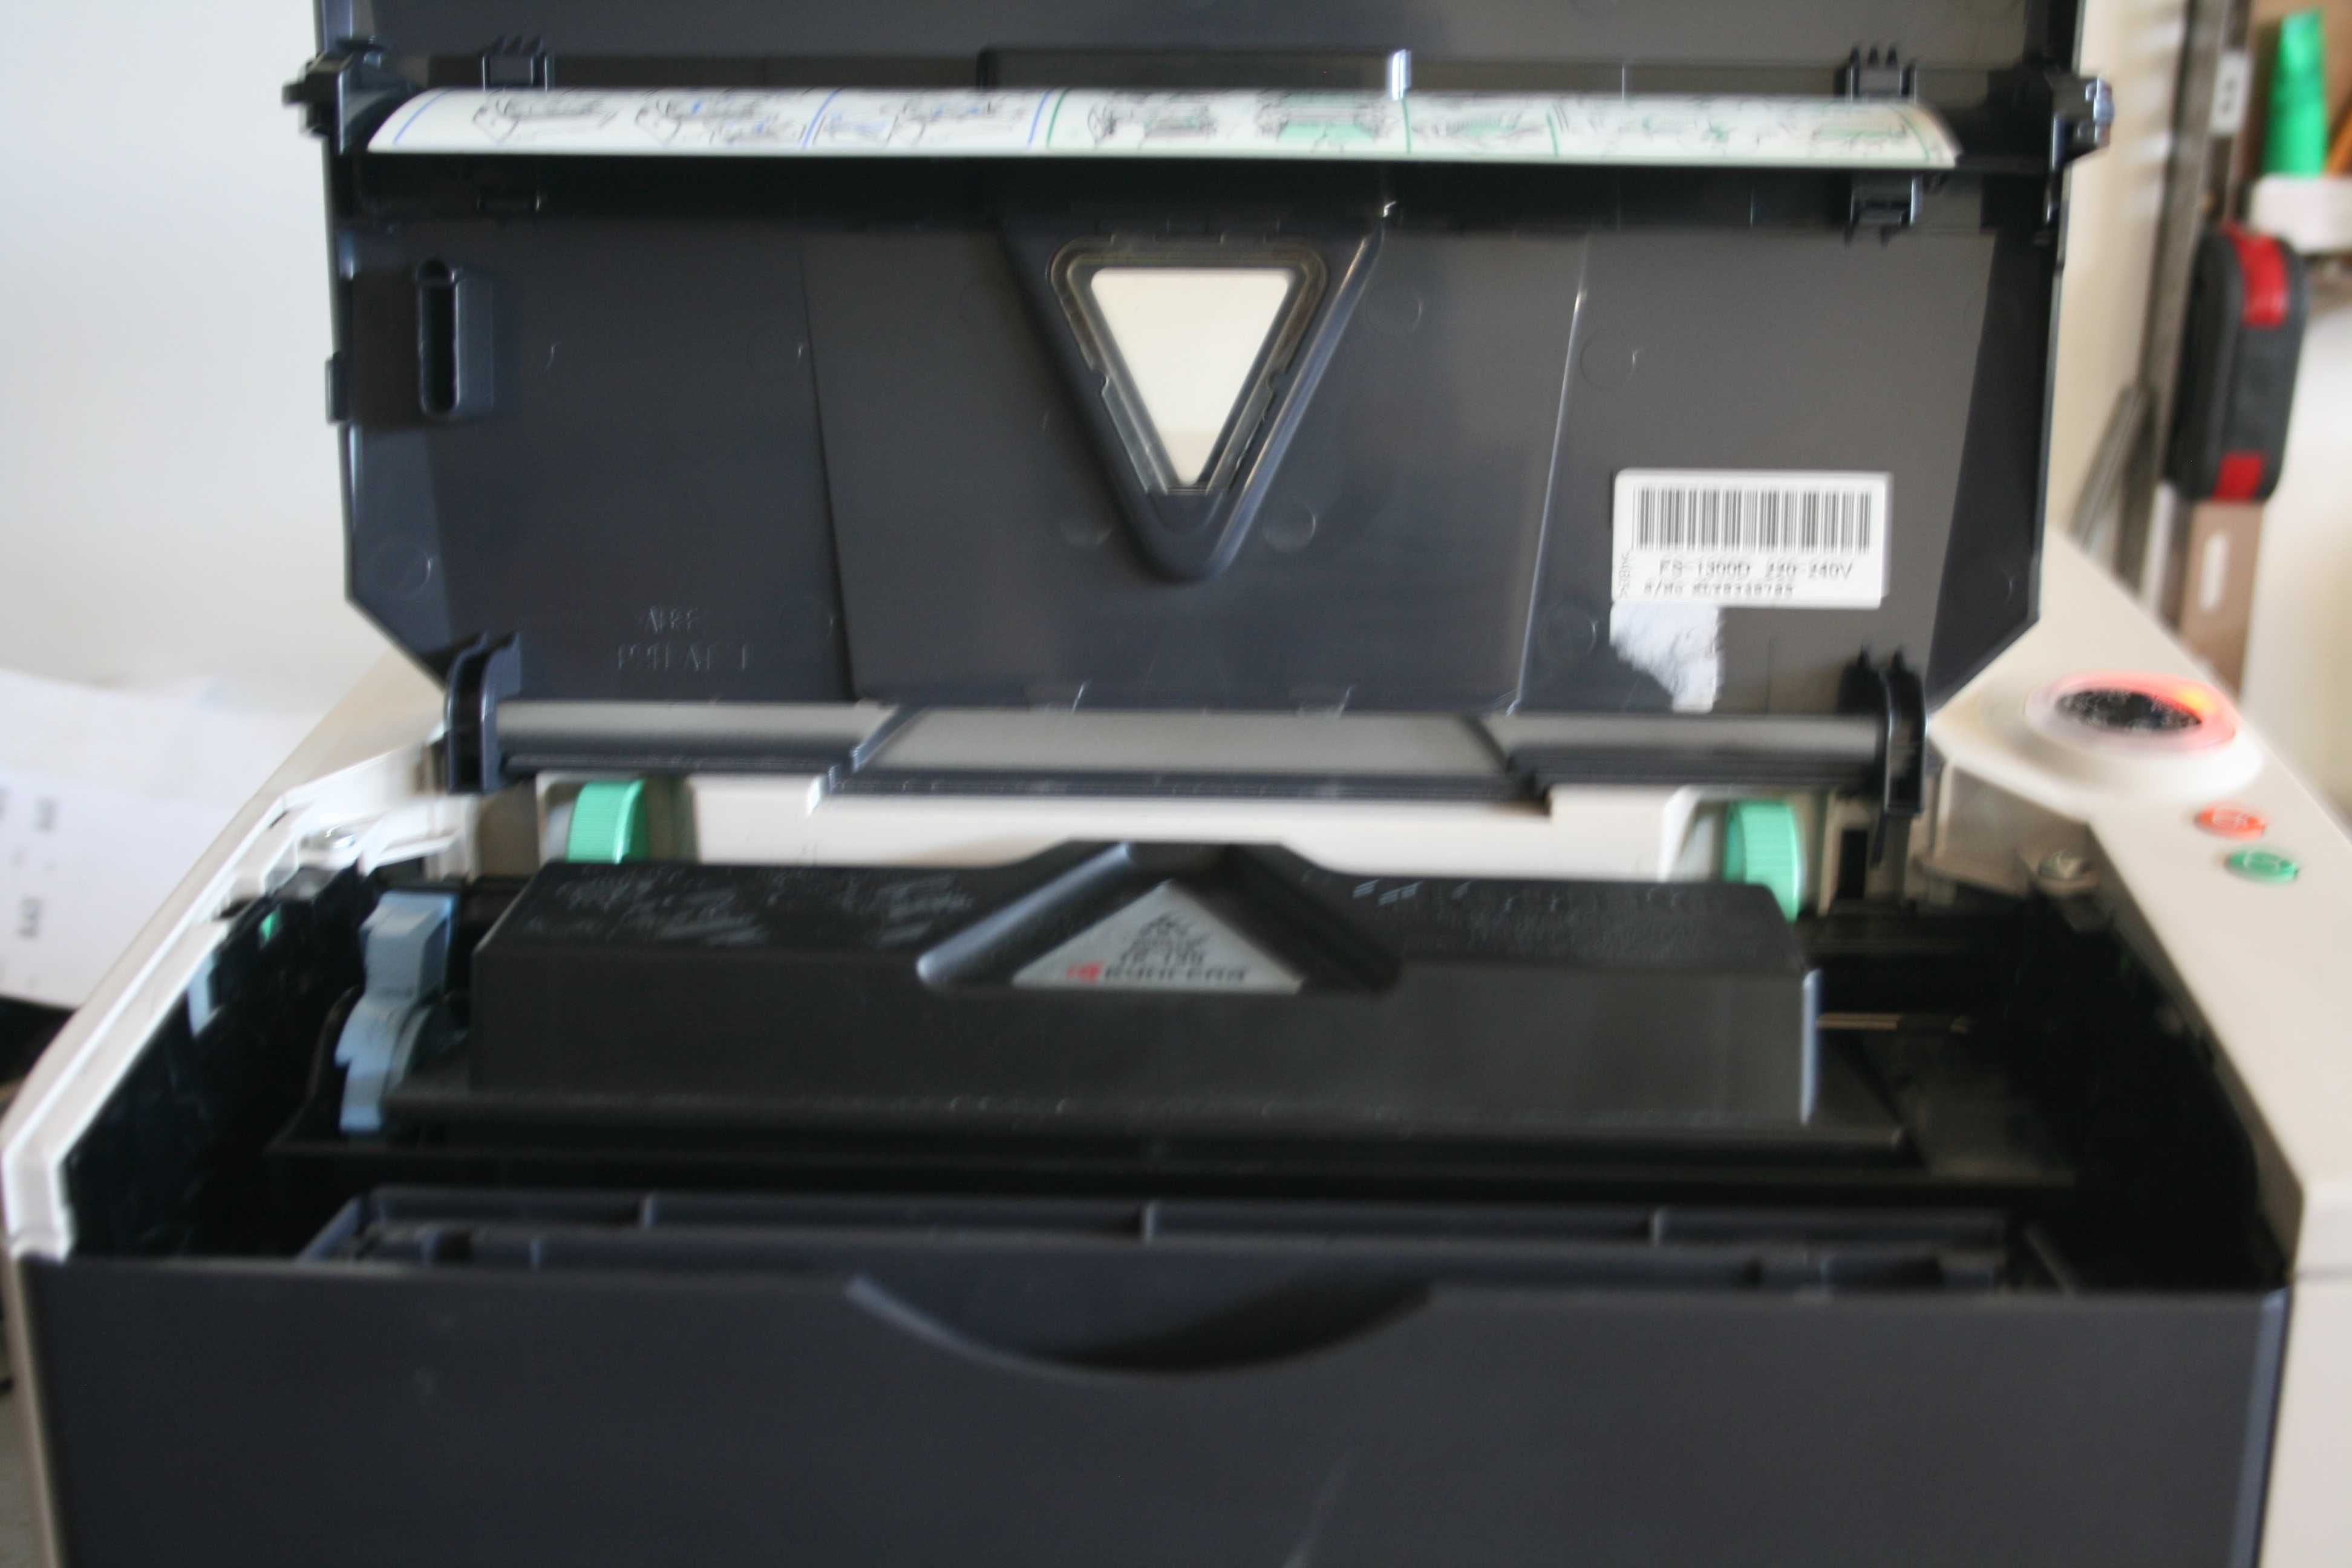 Impressora Kyocera Fs1300